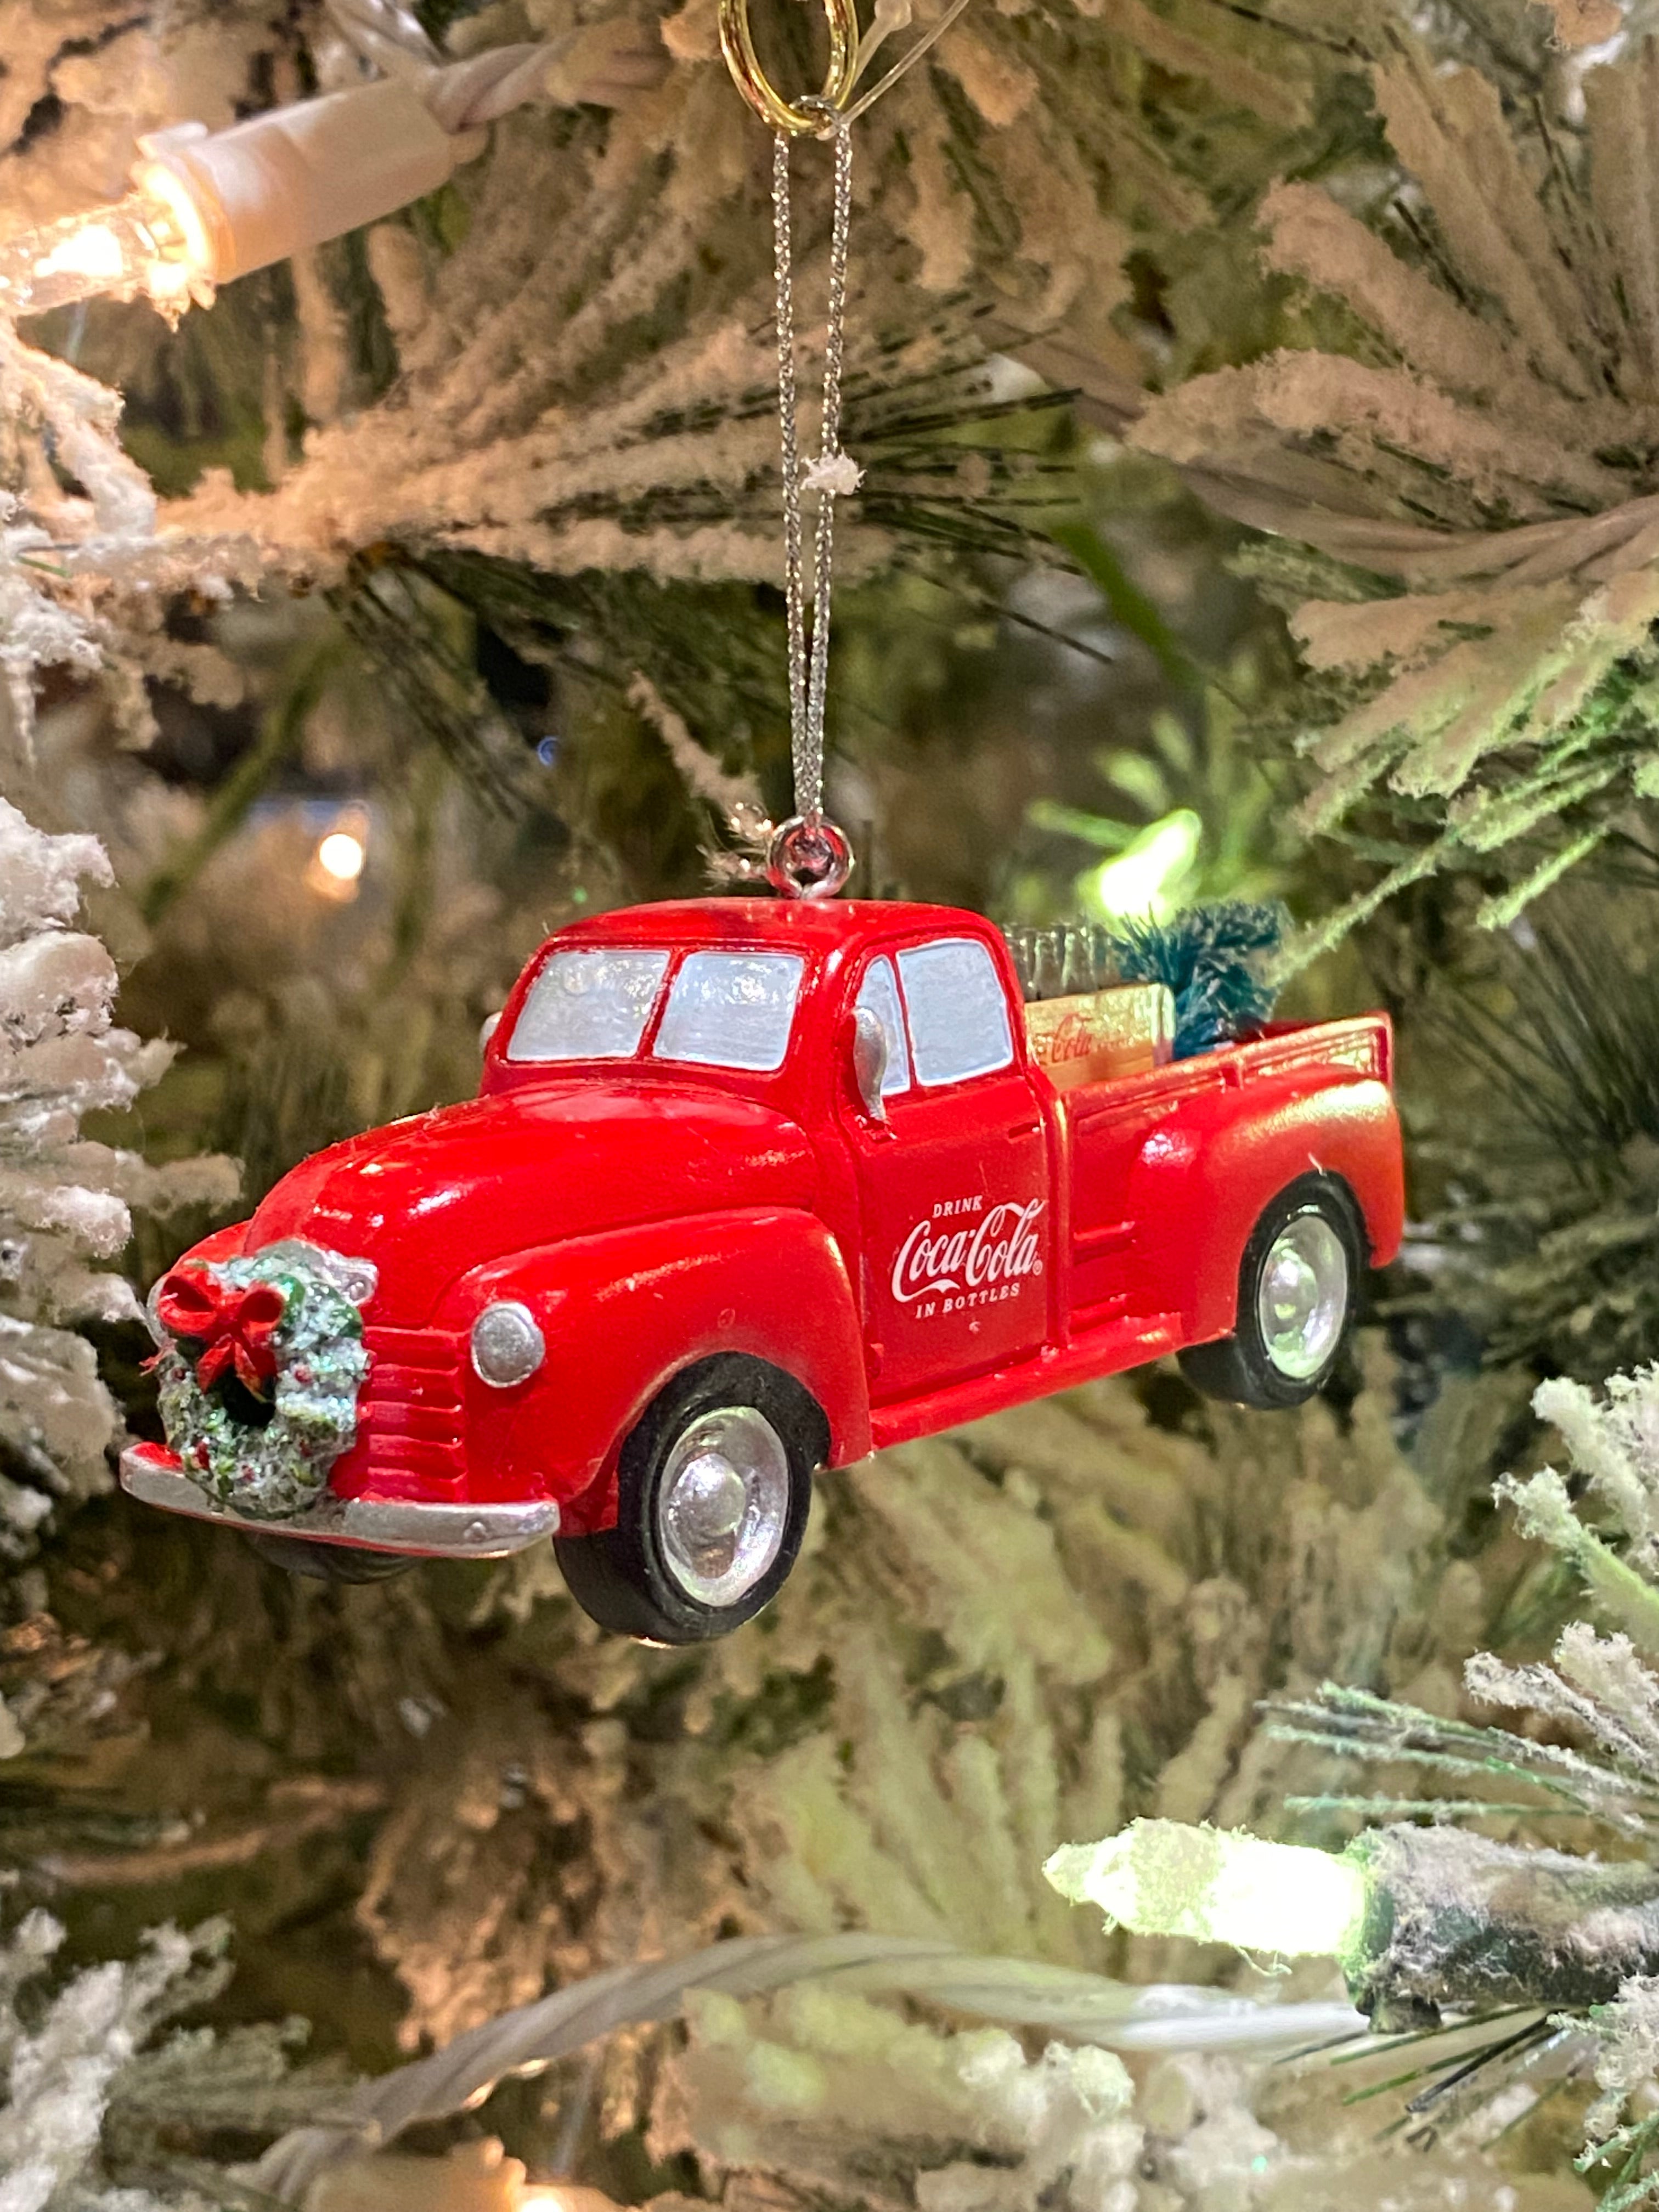 Coke Truck Ornament